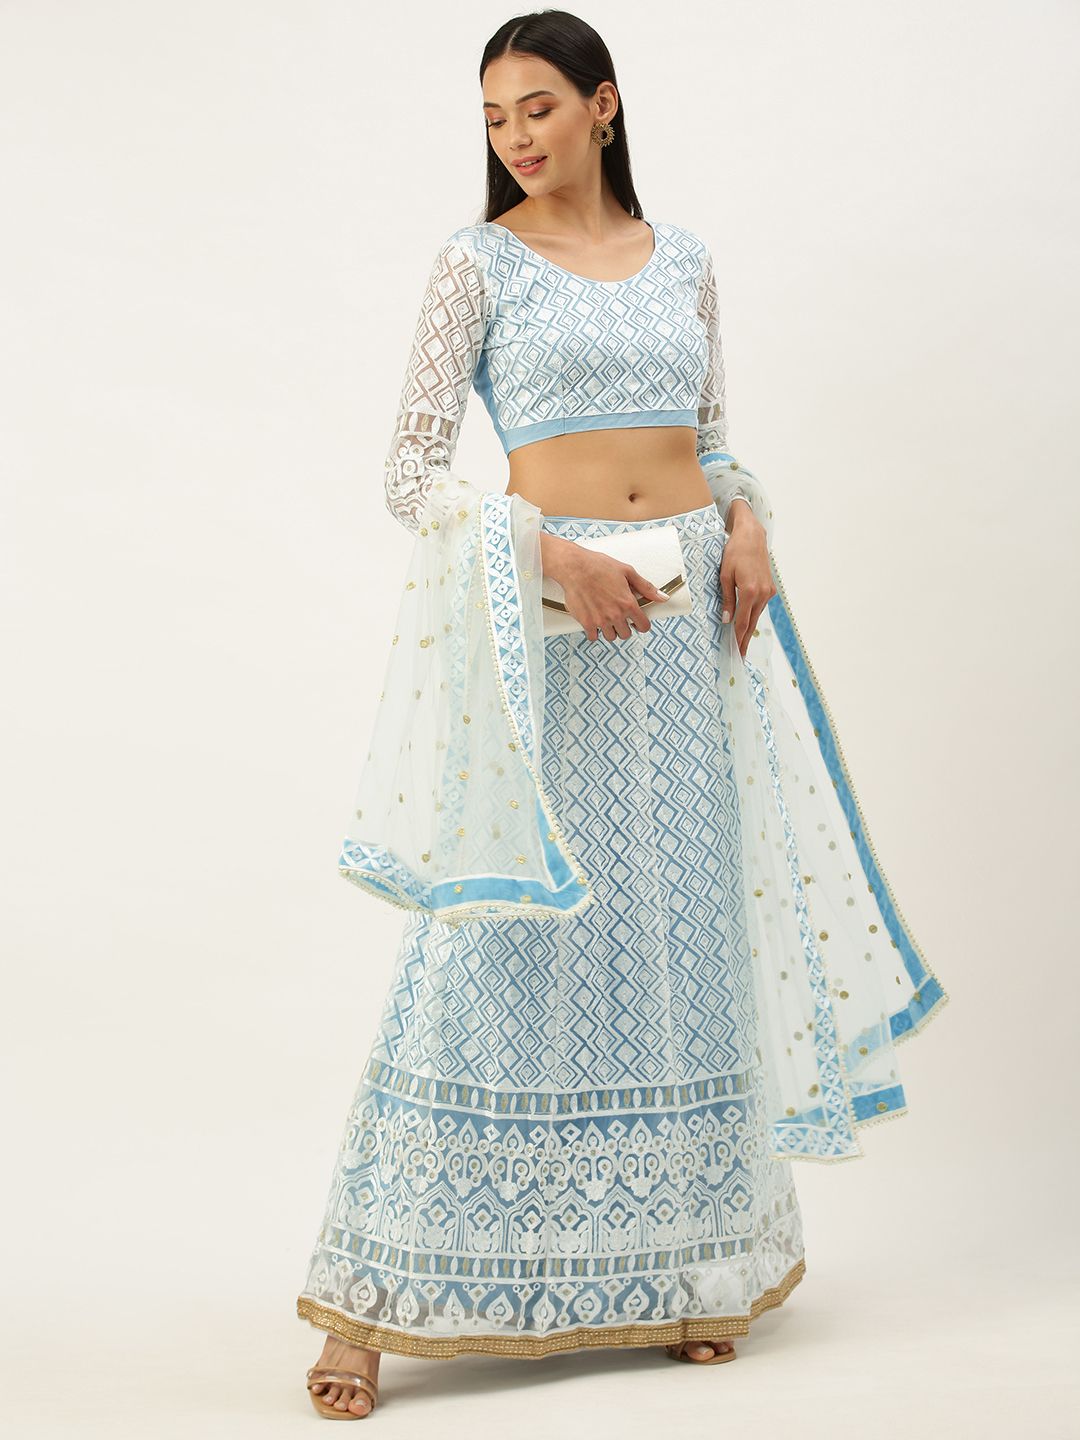 Mameraa Blue & White Embroidered Semi-Stitched Lehenga Choli Price in India